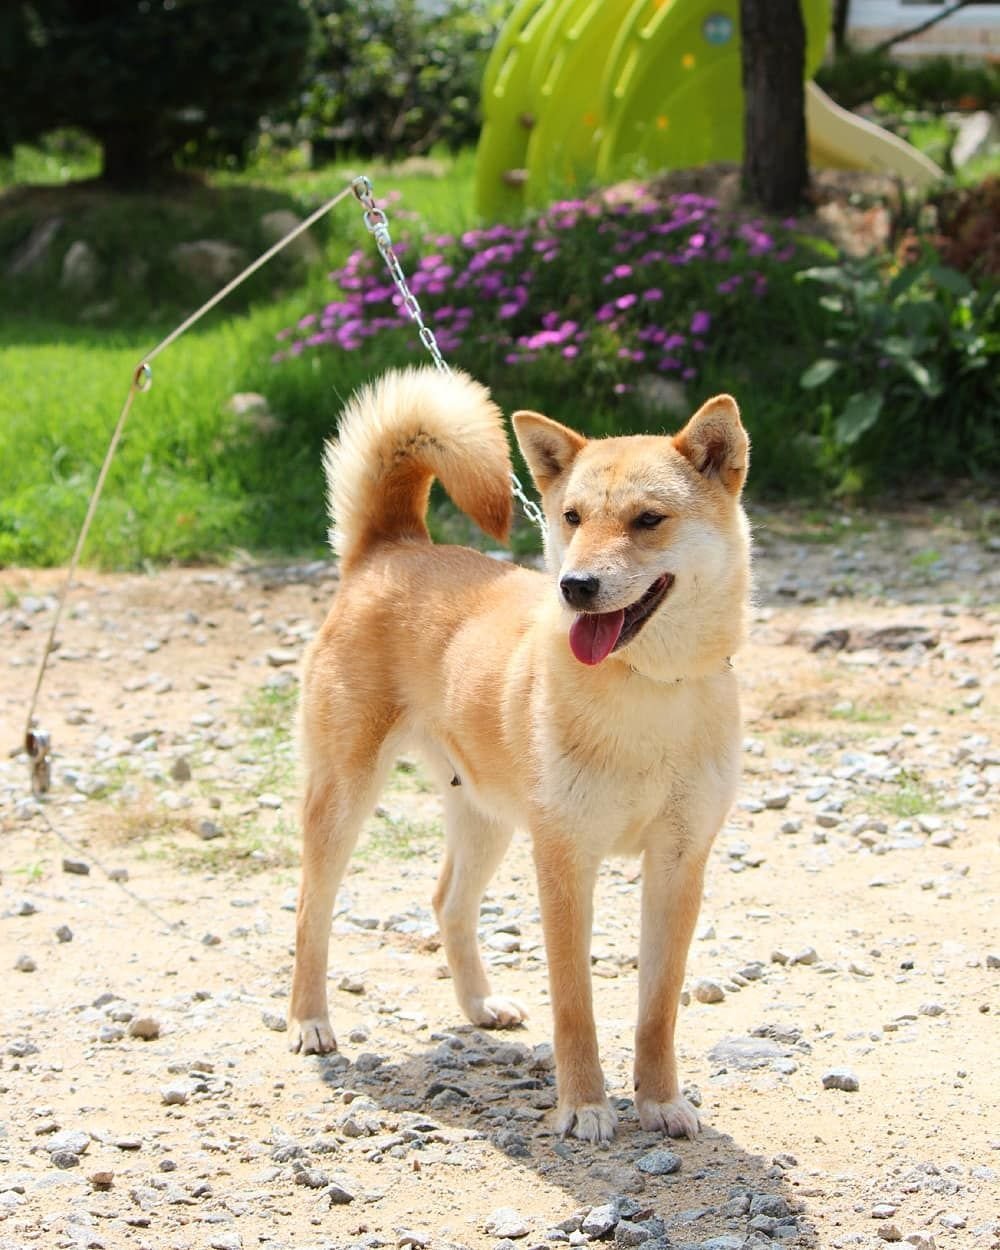 Корейский чиндо ✱ корейская собака джиндо ✱ порода чиндоккэ - характеристика породы